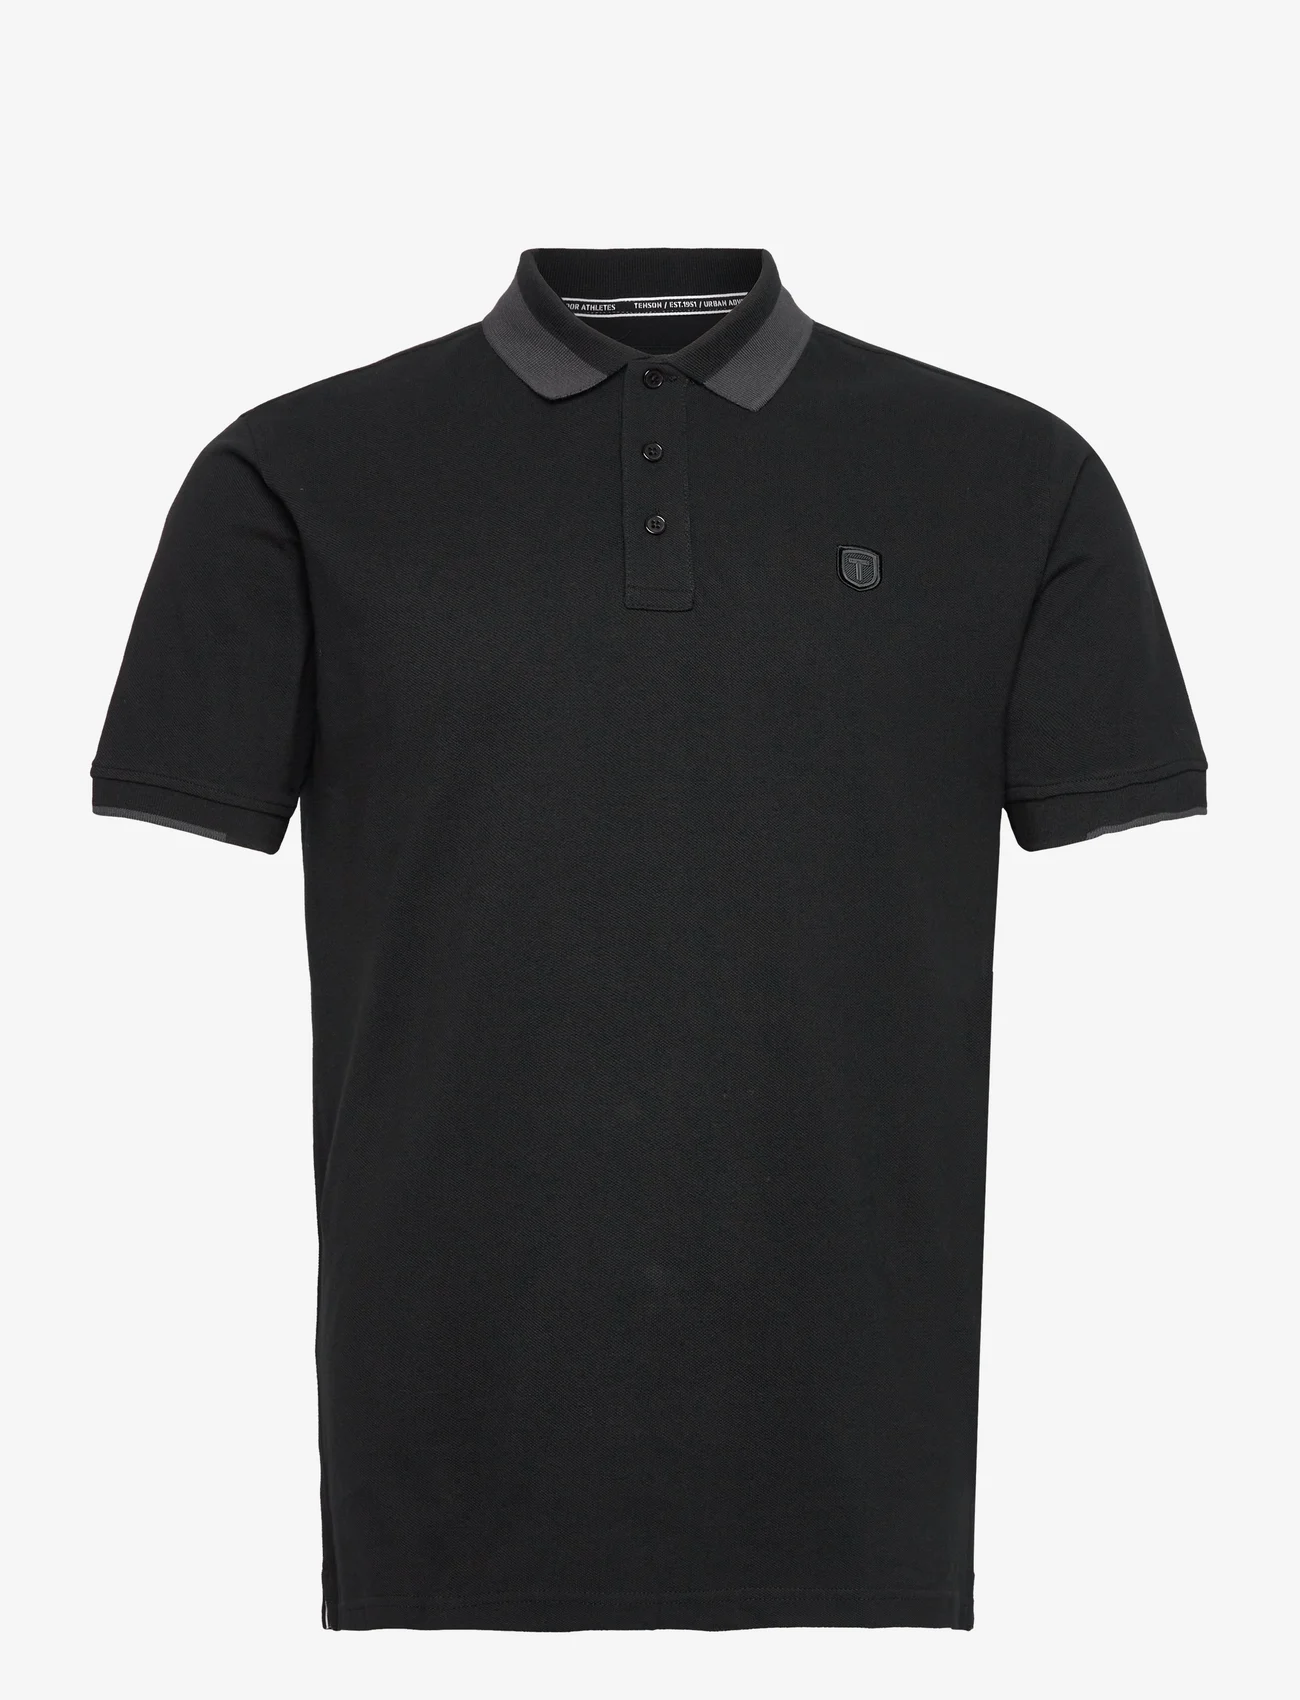 Tenson - Essential Polo M - polo marškinėliai trumpomis rankovėmis - black - 0